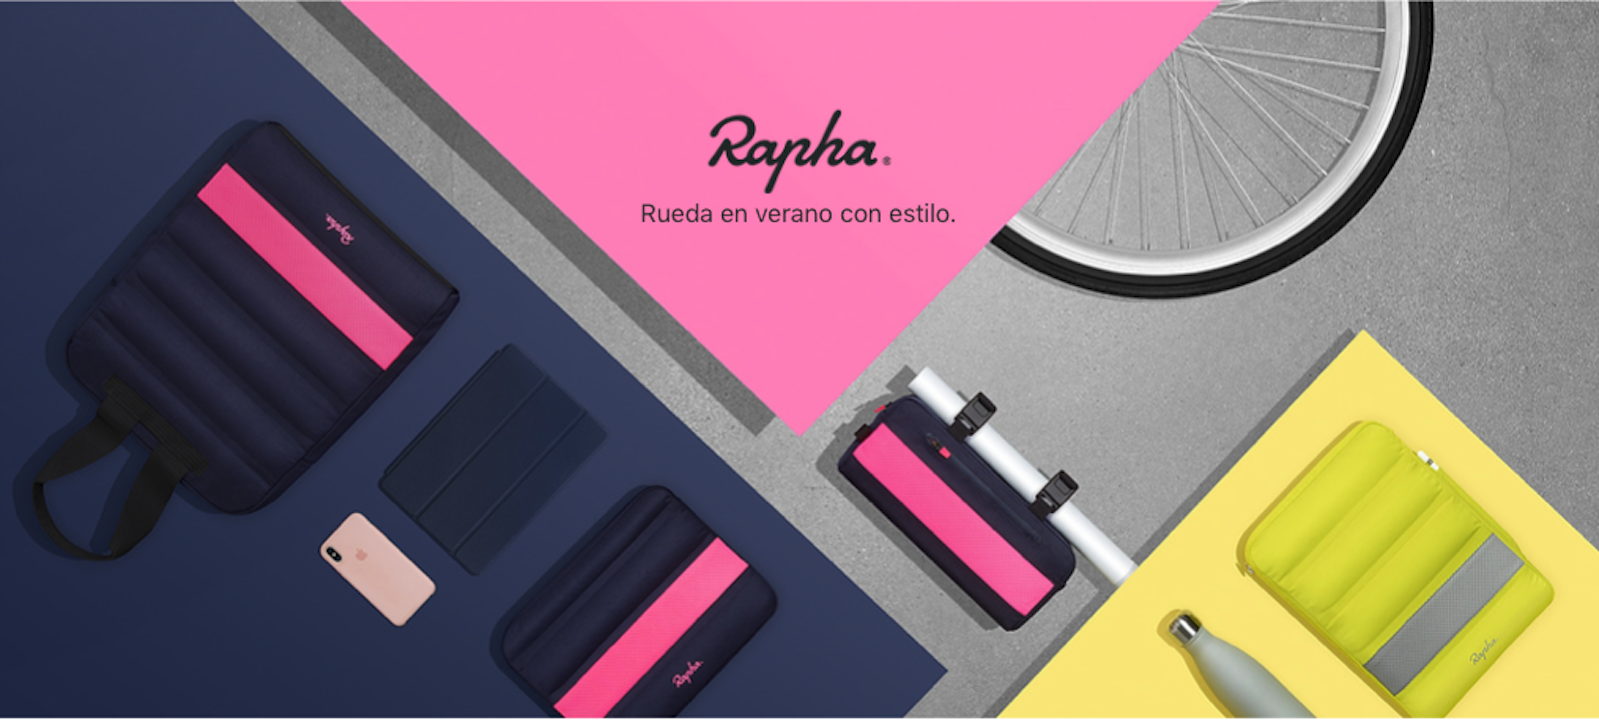 Rapha Apple Store exclusivo